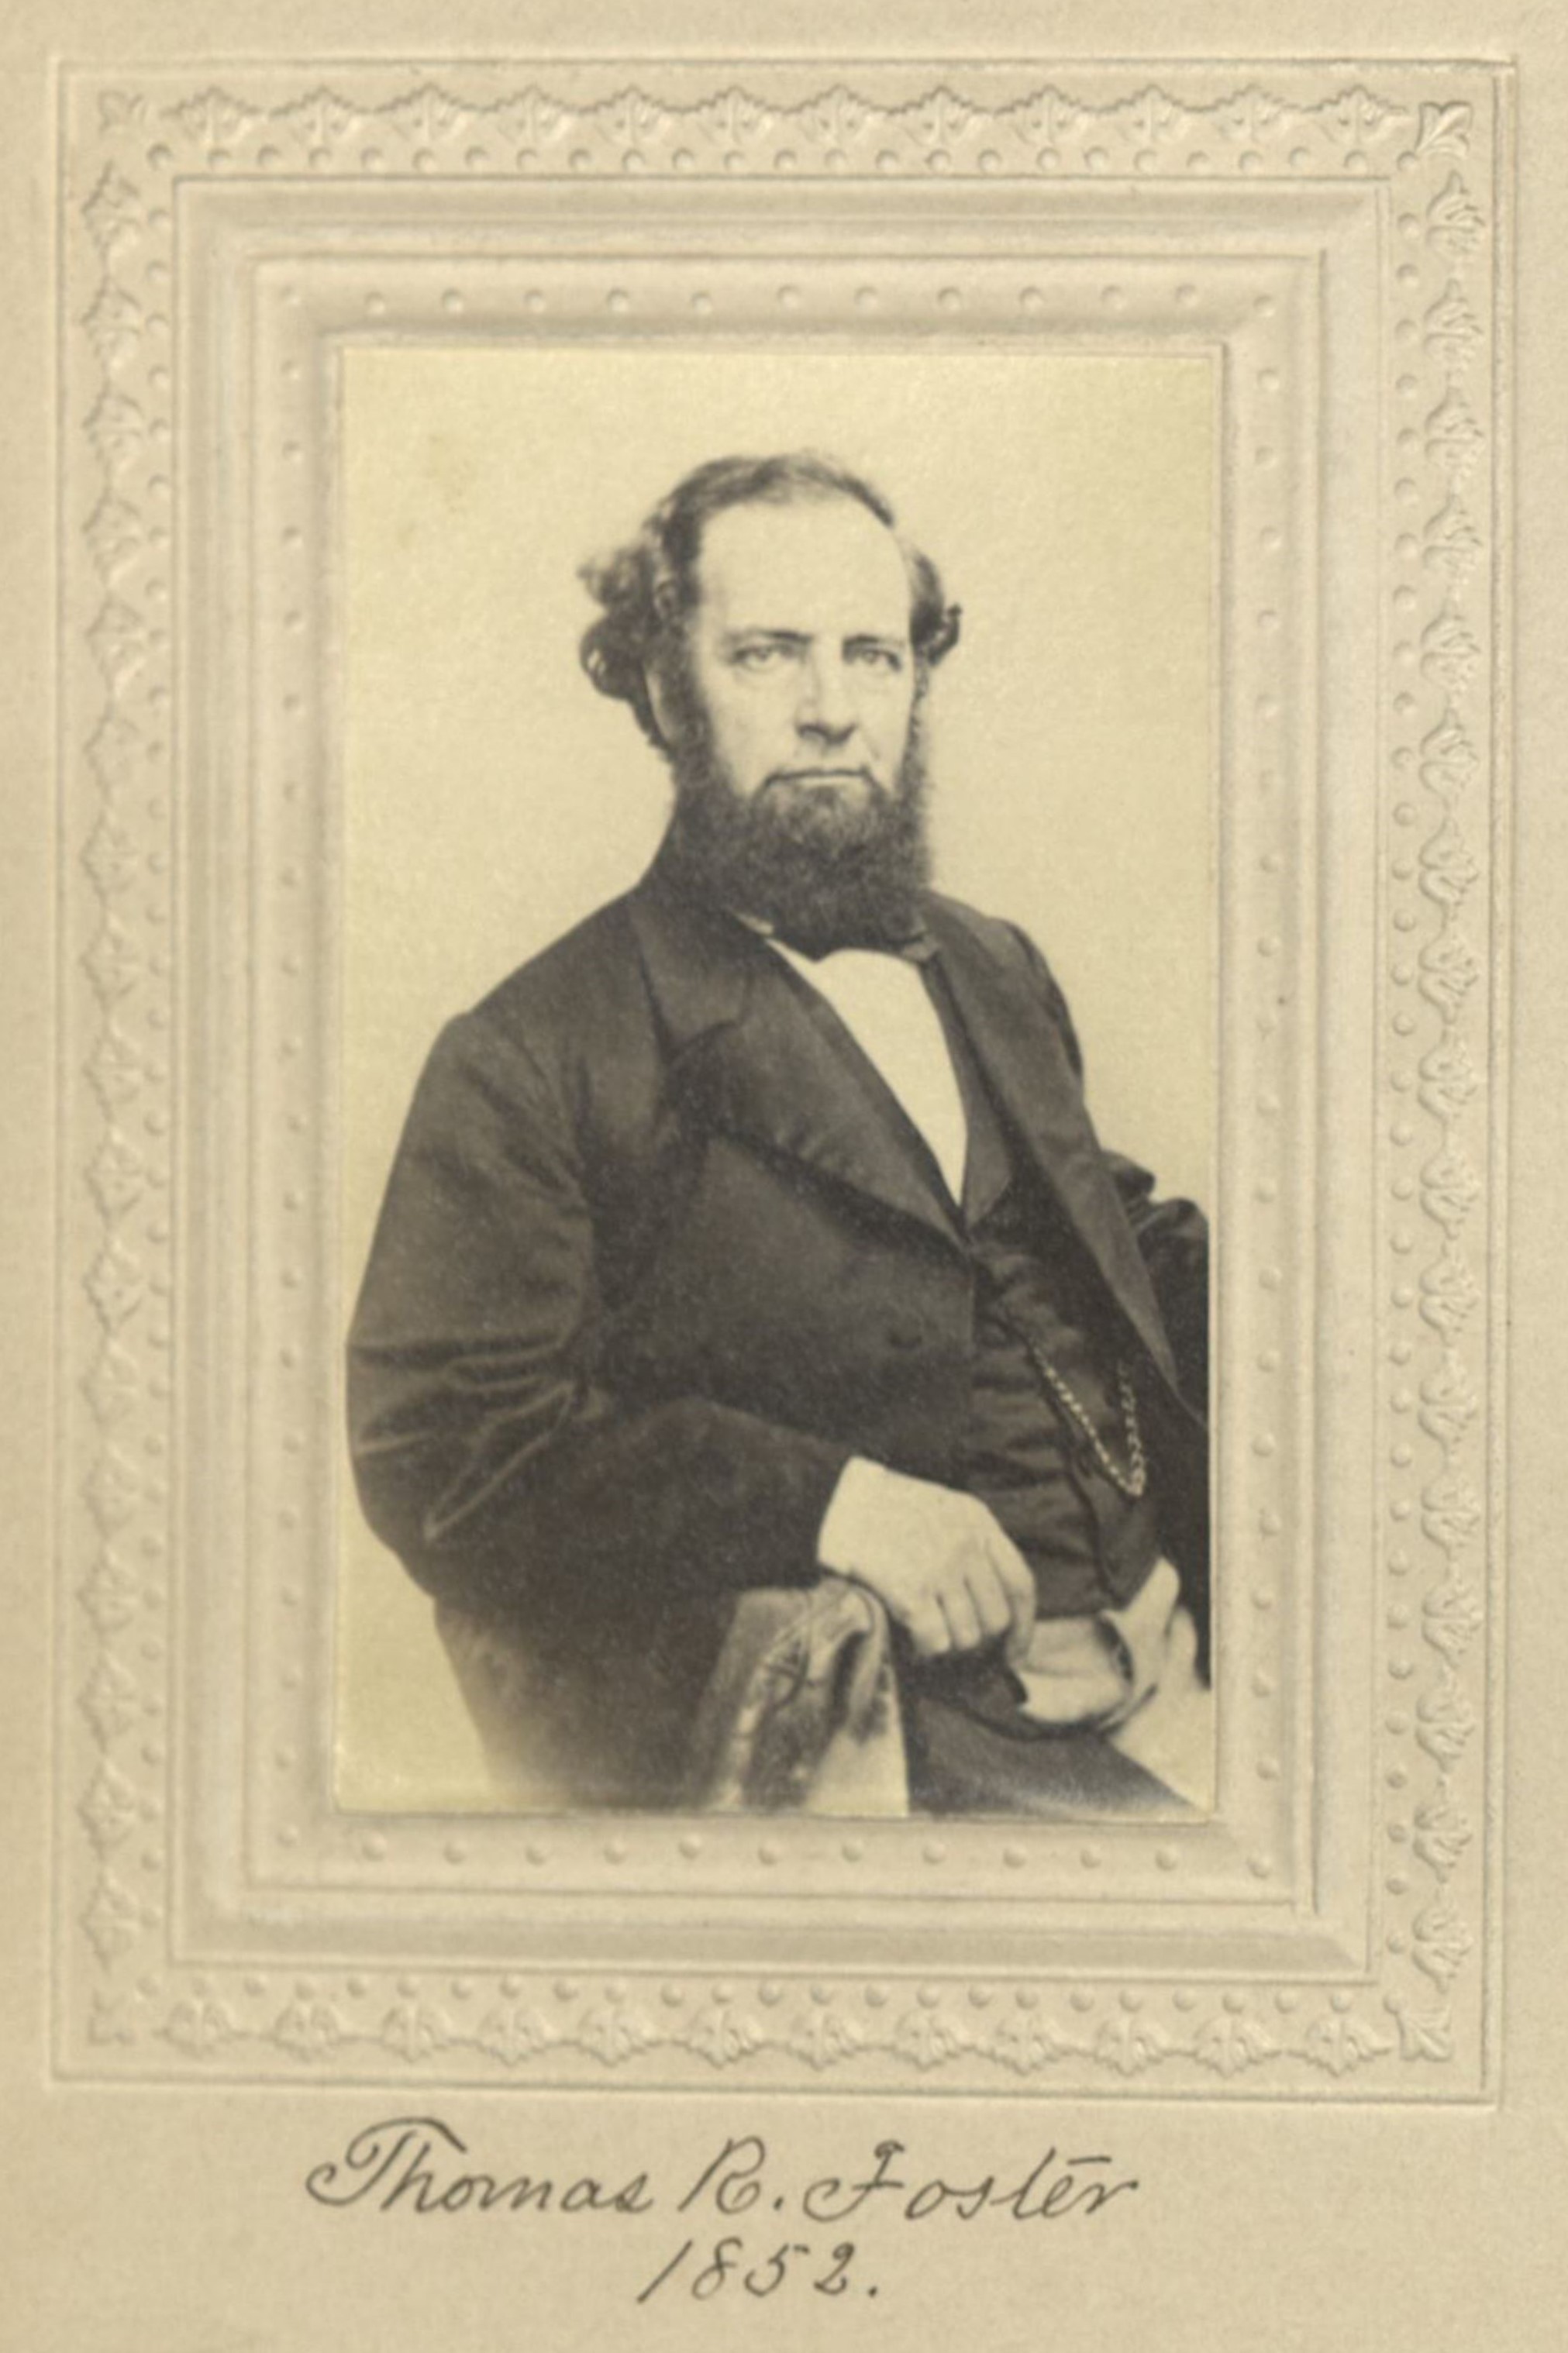 Member portrait of Thomas R. Foster